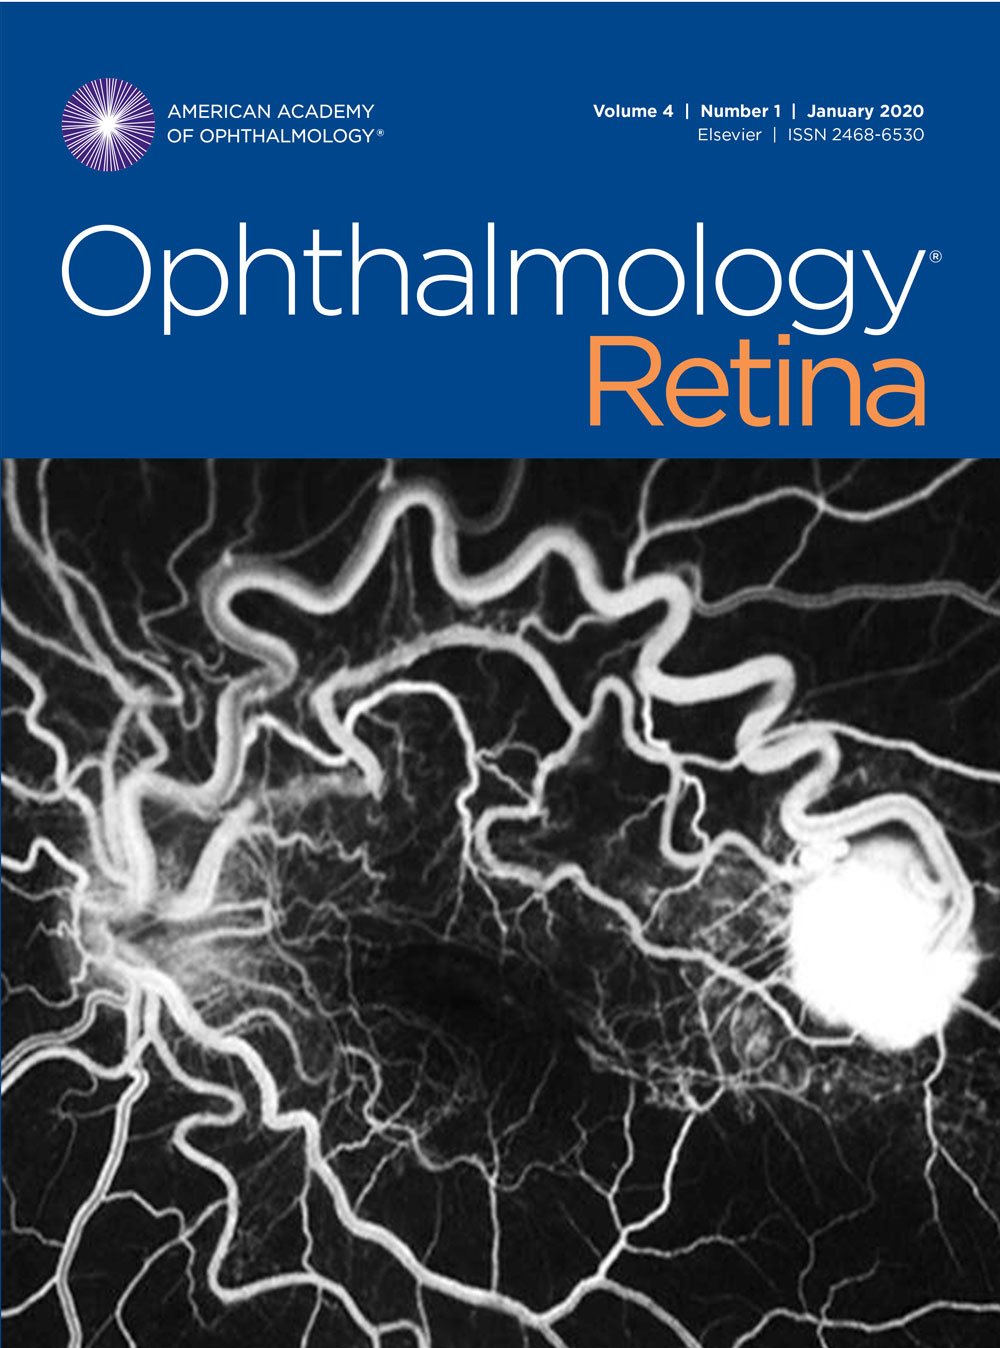 Ophthalmology Retina Volume 4, Number 1 January 2020 image